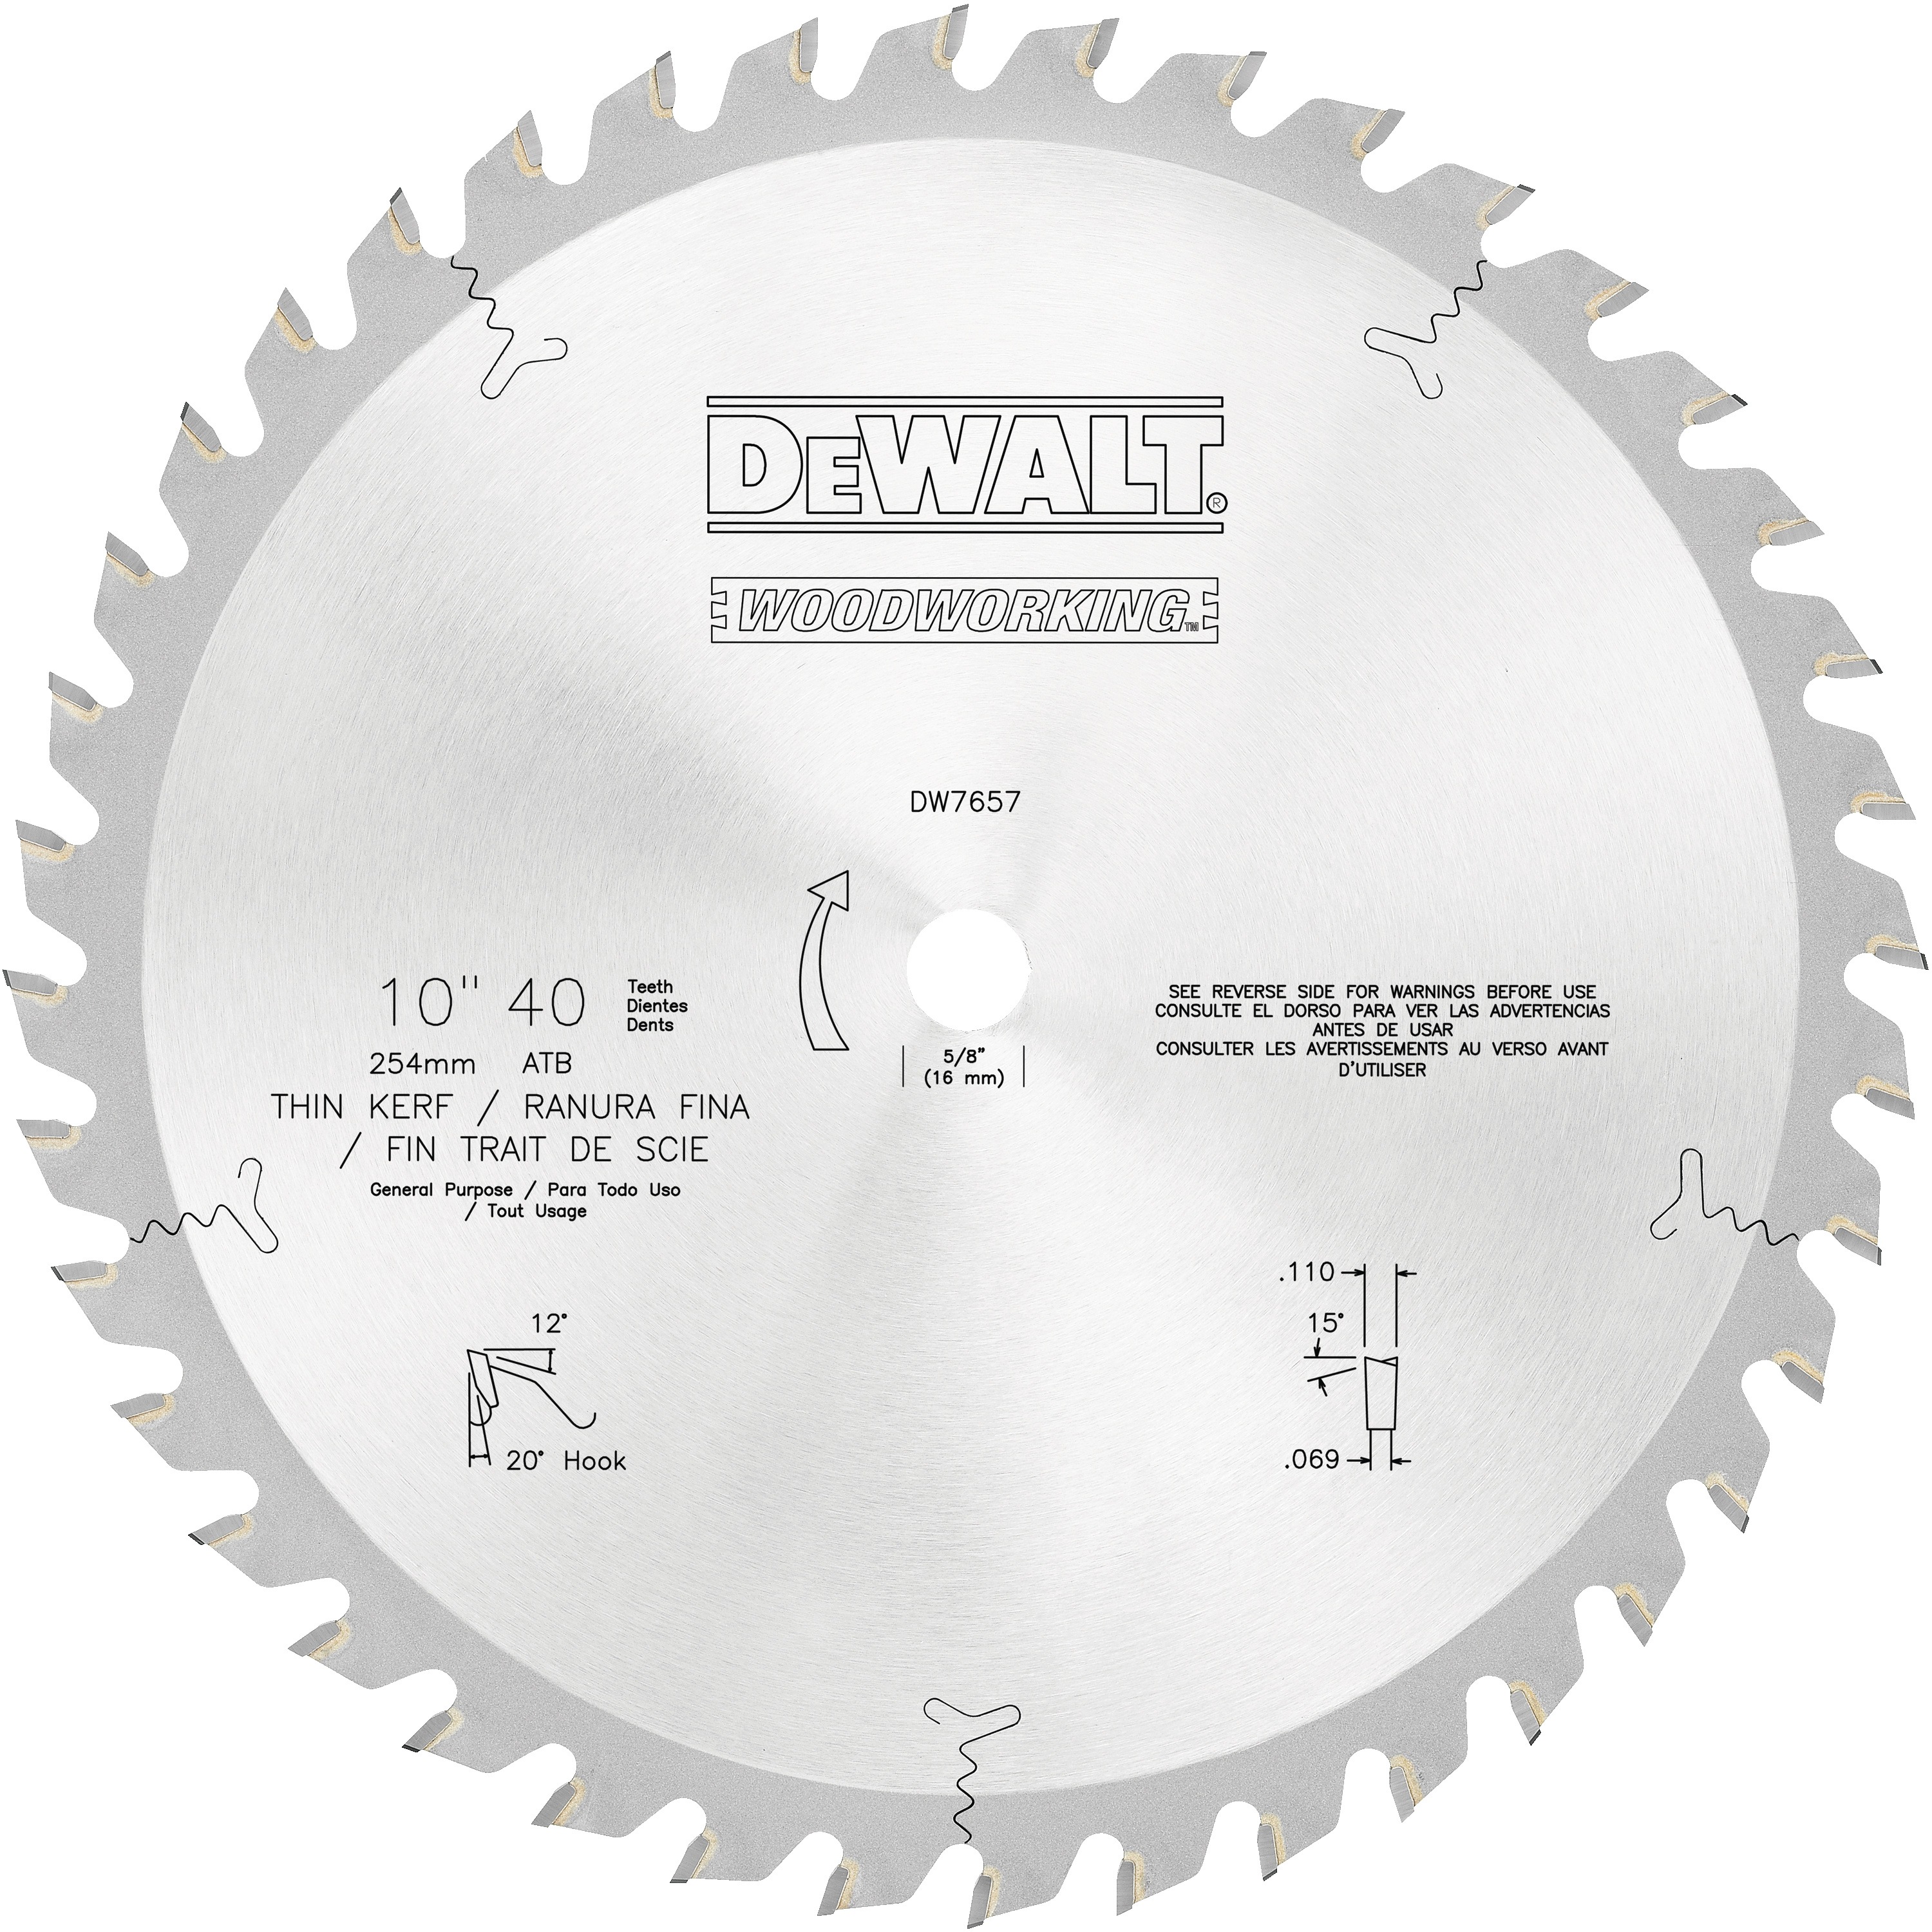 DEWALT - 10 40T General Purpose Woodworking Saw Blade - DW7657